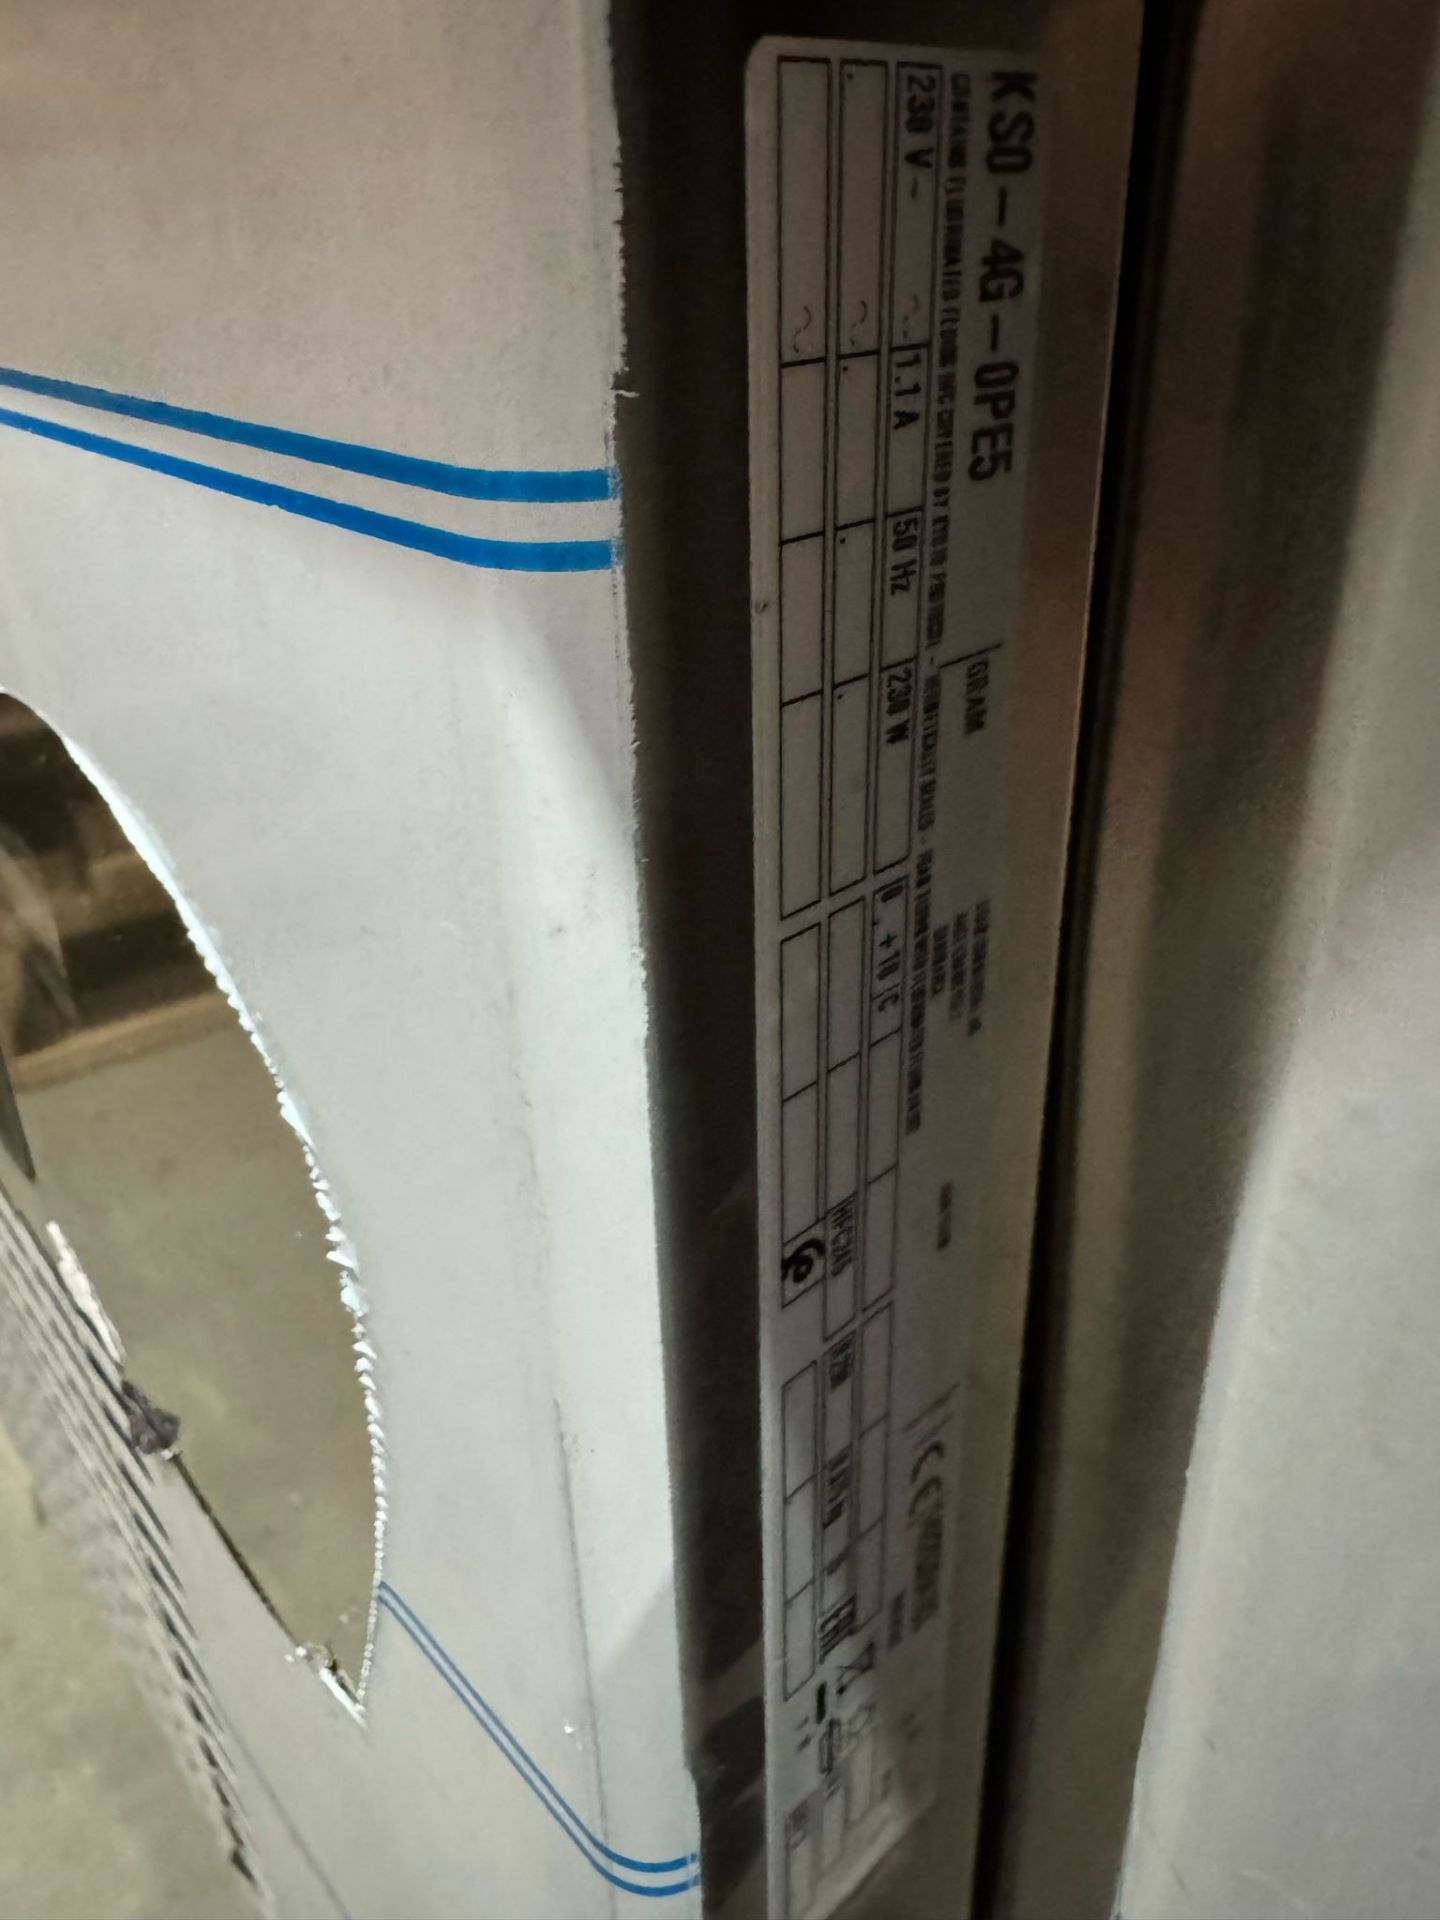 Gram Snack Counter KS 0-4G / Under Counter Refrigeration Unit (4 x drawers) KS0-4G-0PE5 - Image 8 of 13